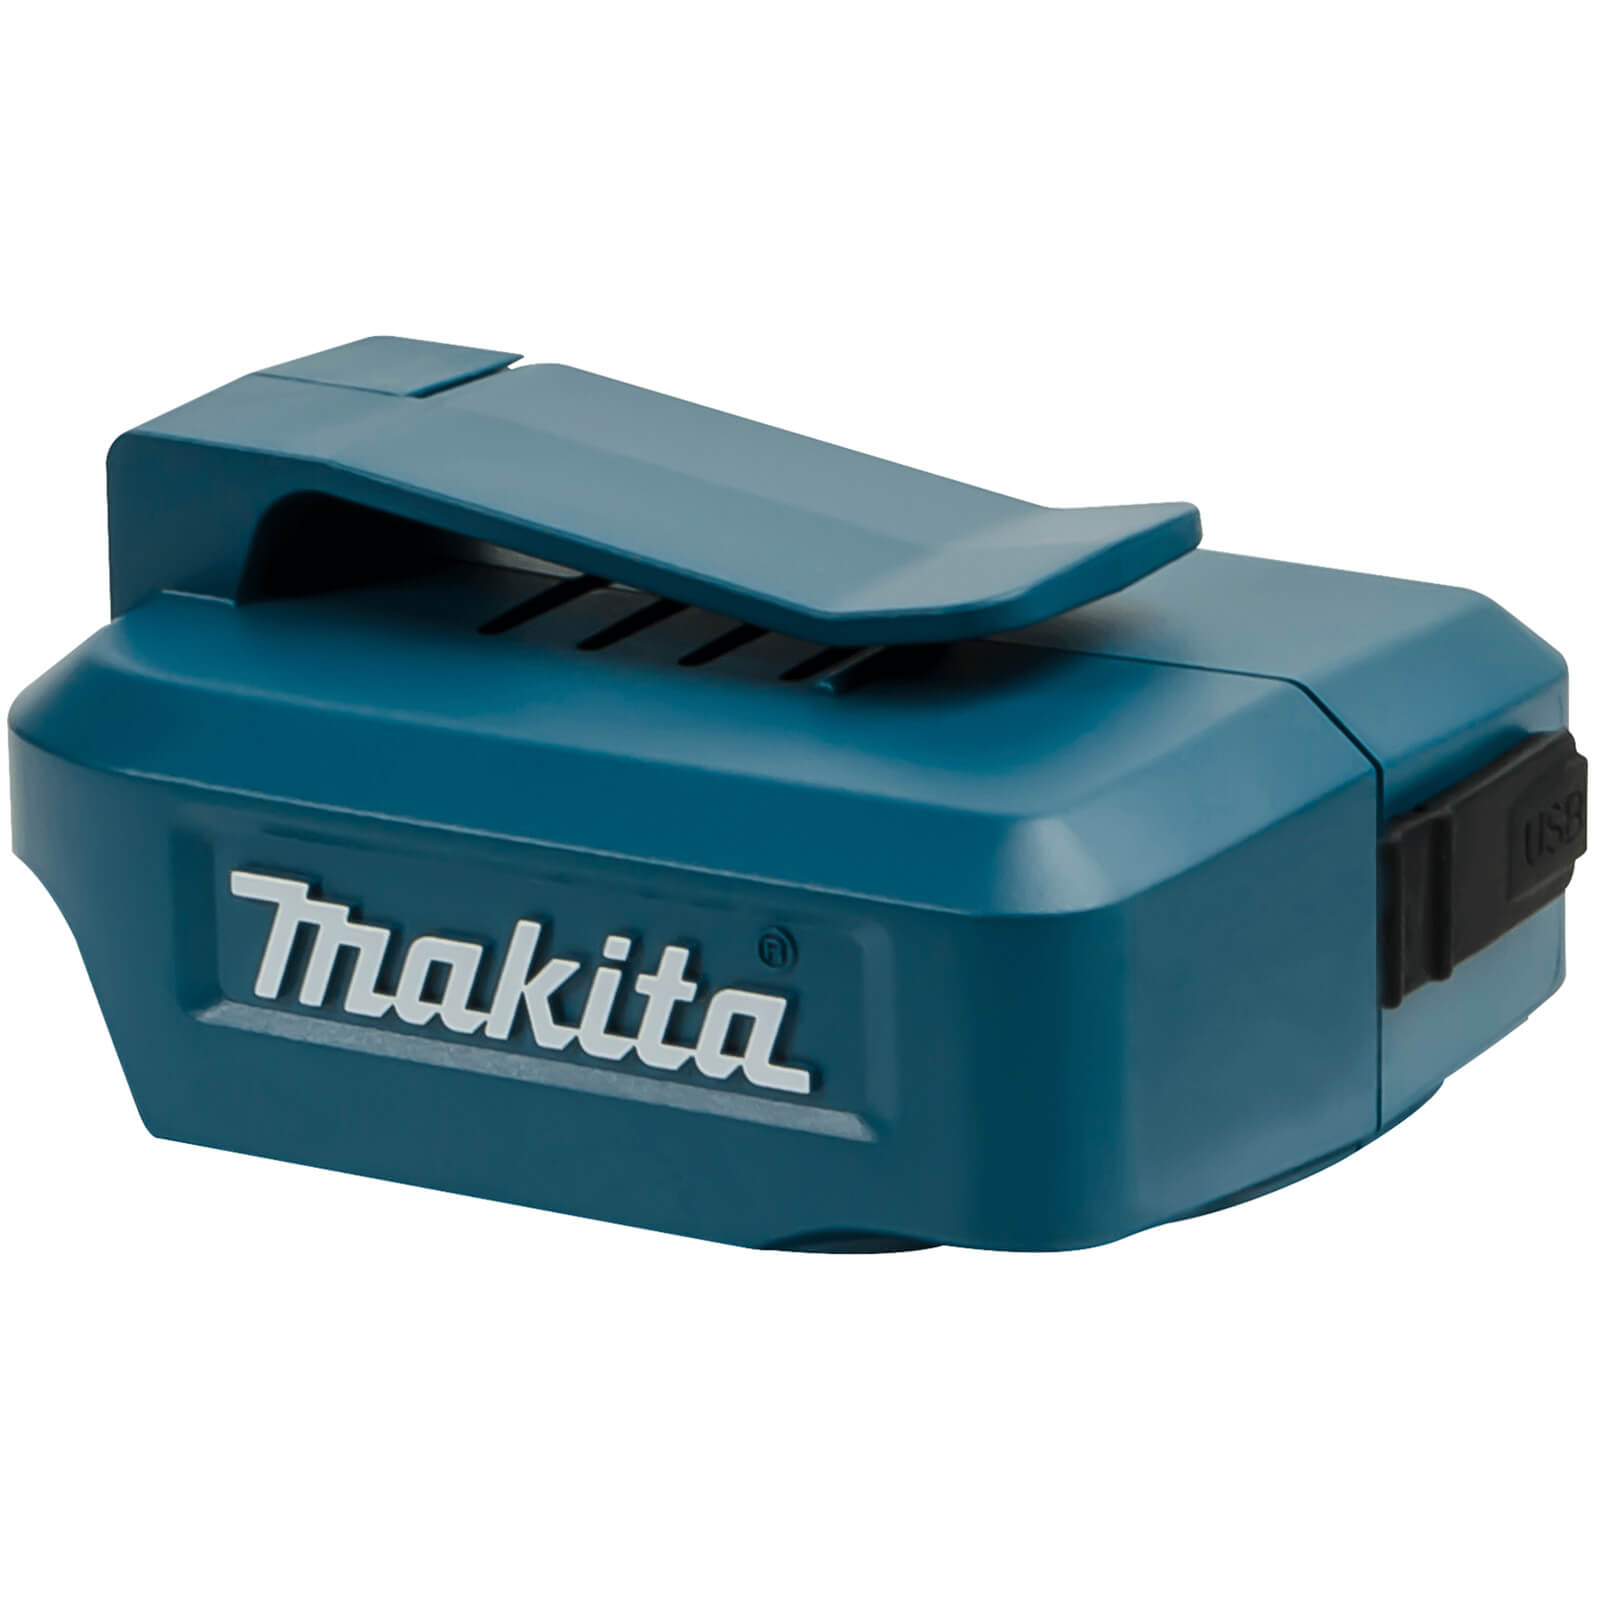 Tool bat. Makita адаптер CXT 220. Фонарь Макита 10.8. Makita Battery Socket. Makita 199024-2.